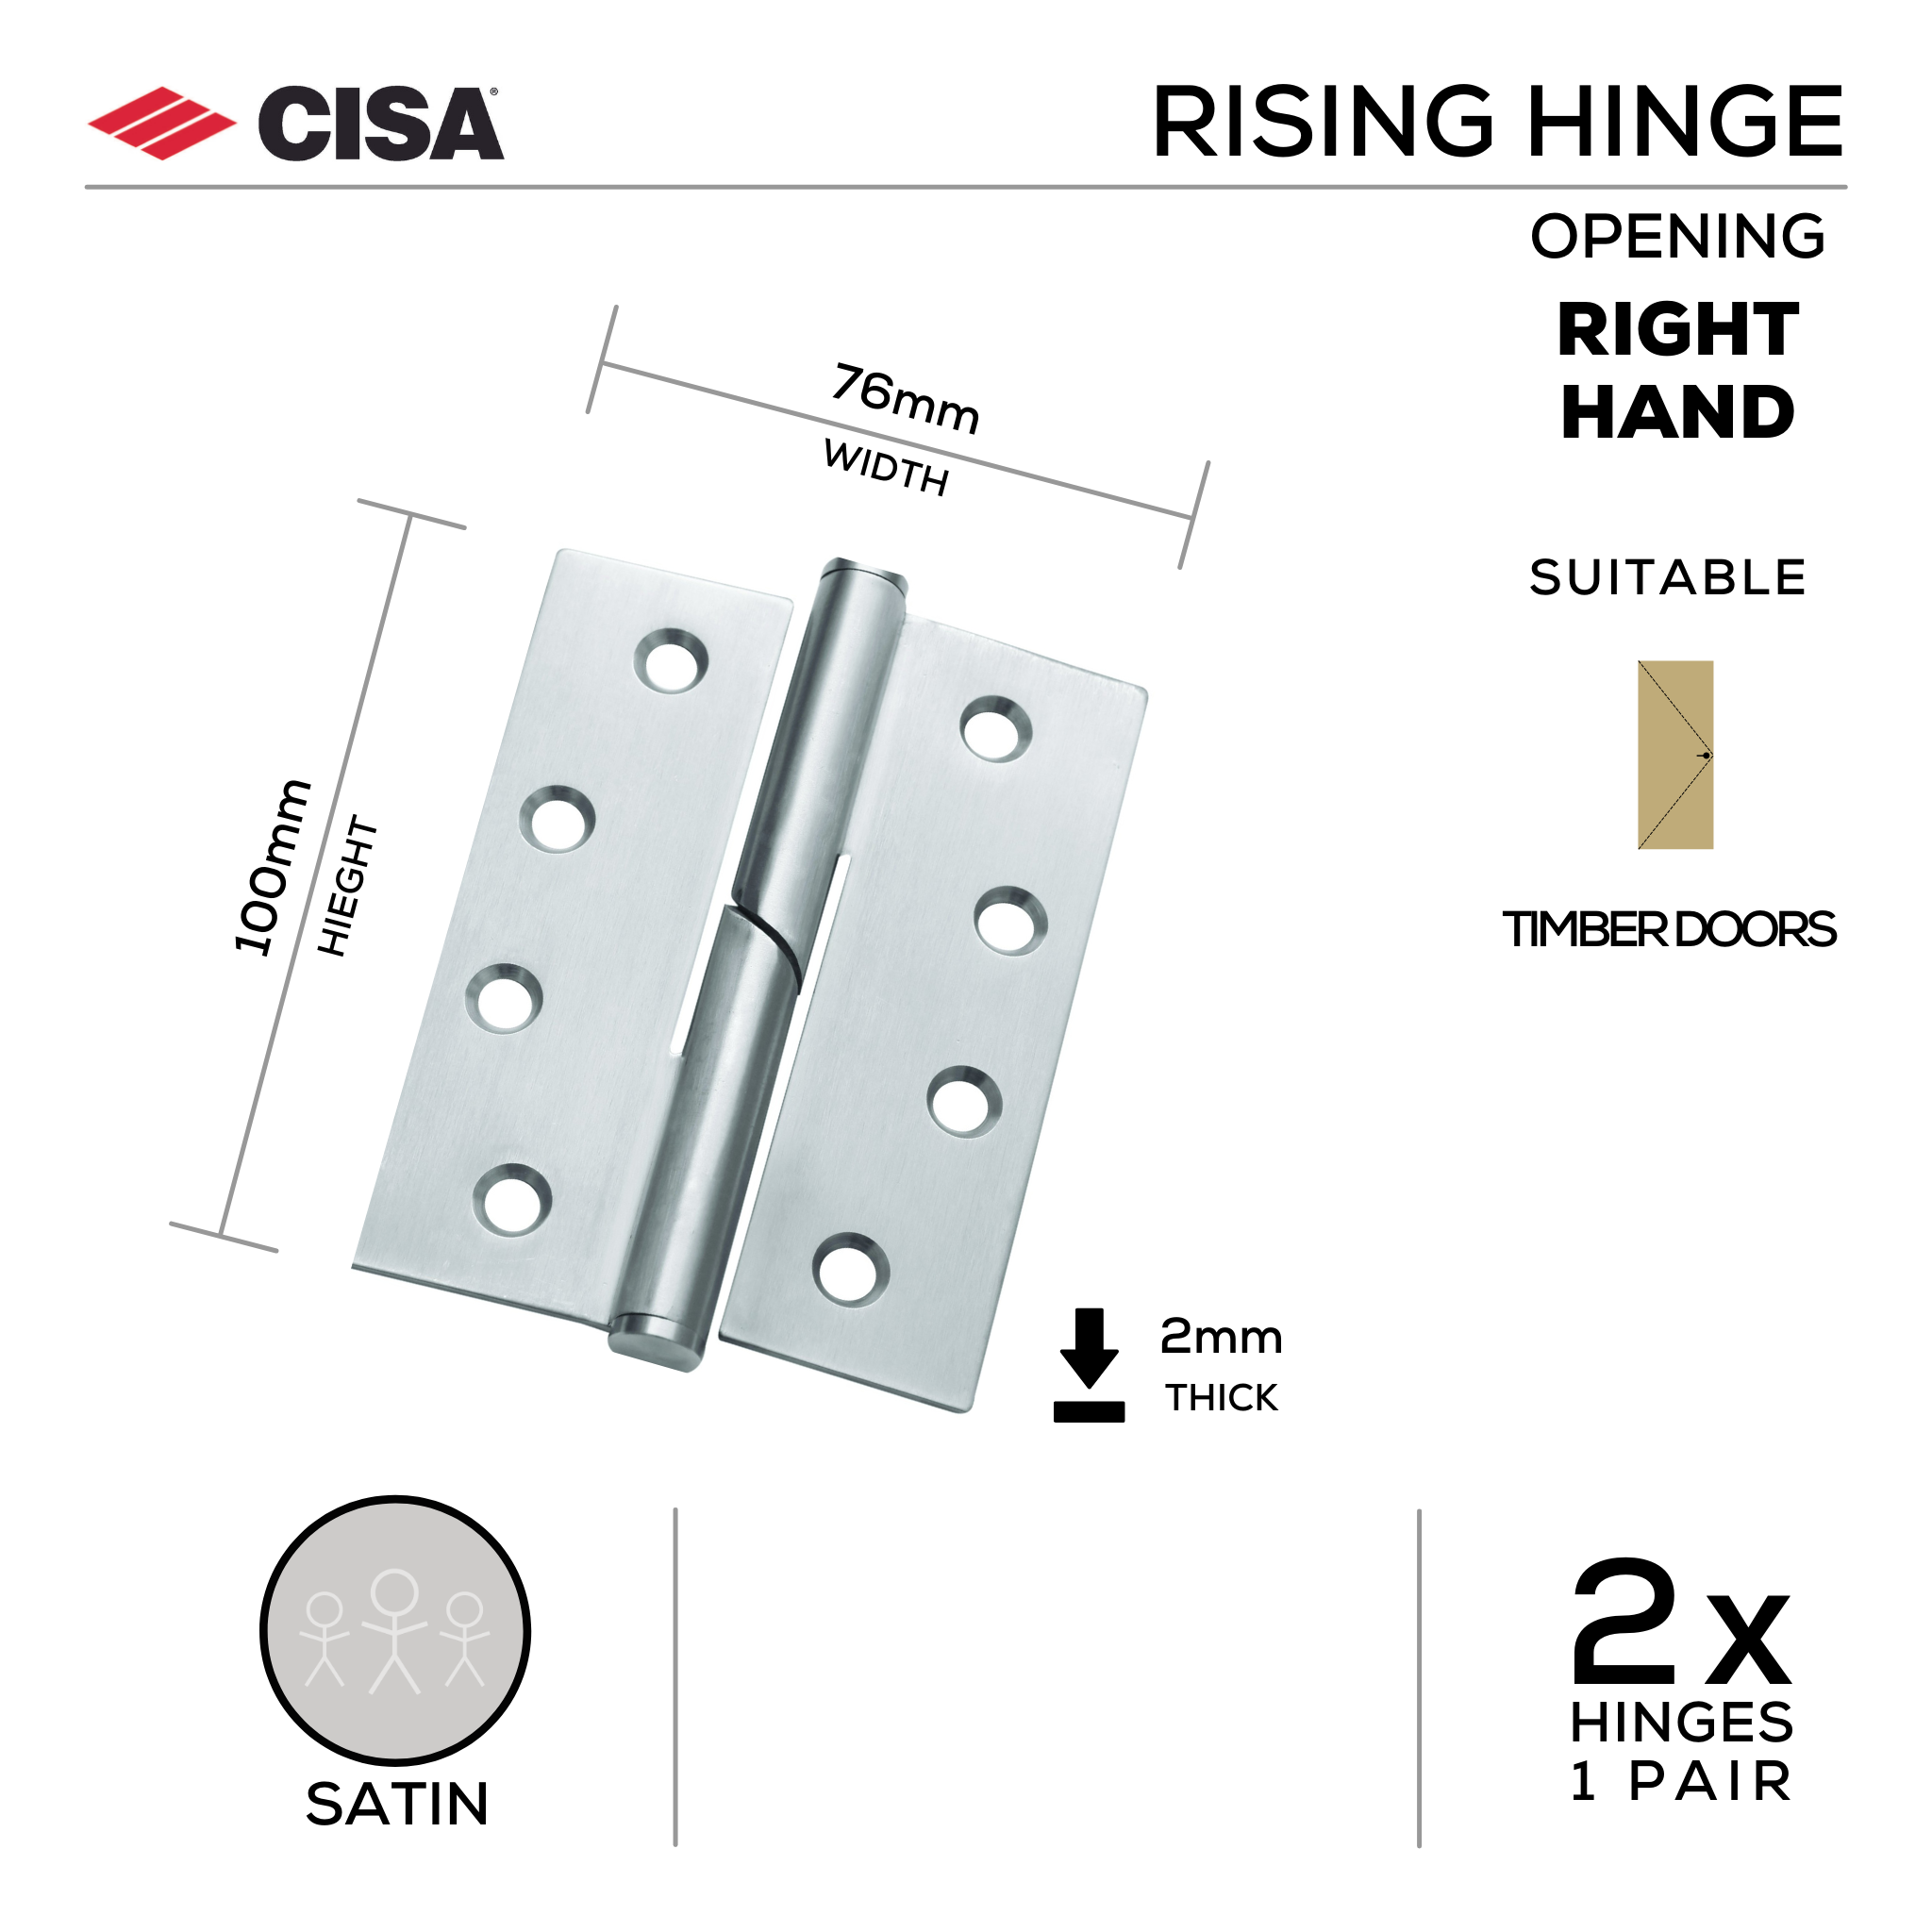 FH76X2RR, Rising Hinge, Lift Off, Right Hand, 2 x Hinges (1 Pair), 100mm (h) x 76mm (w) x 2mm (t), Satin, CISA